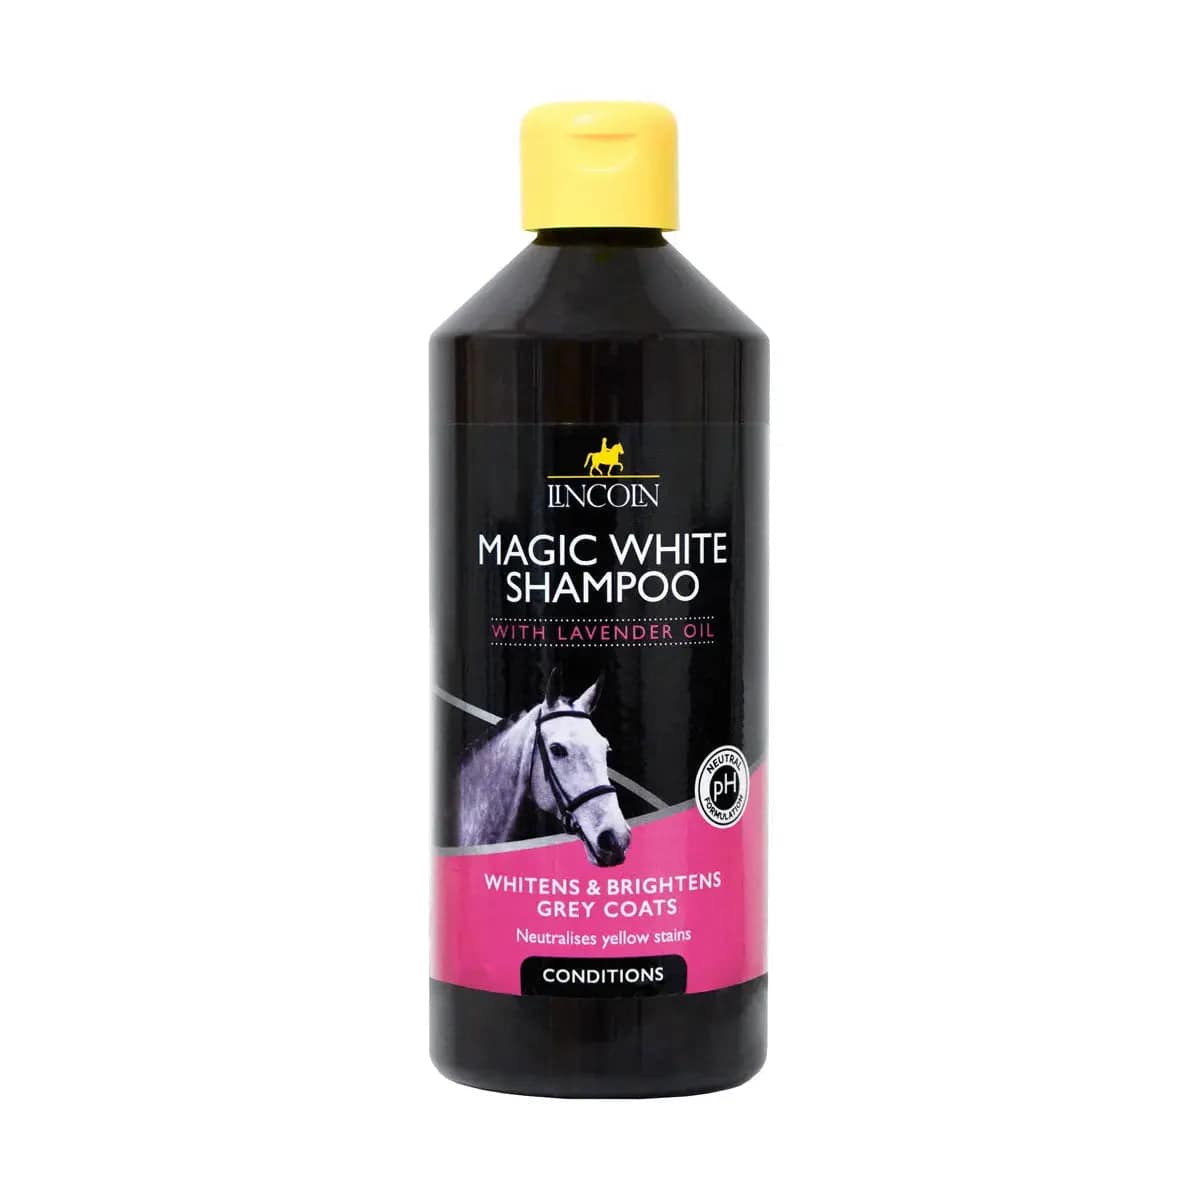 Lincoln Magic White Horse Shampoo 500ml Lincoln Shampoos & Conditioners Barnstaple Equestrian Supplies